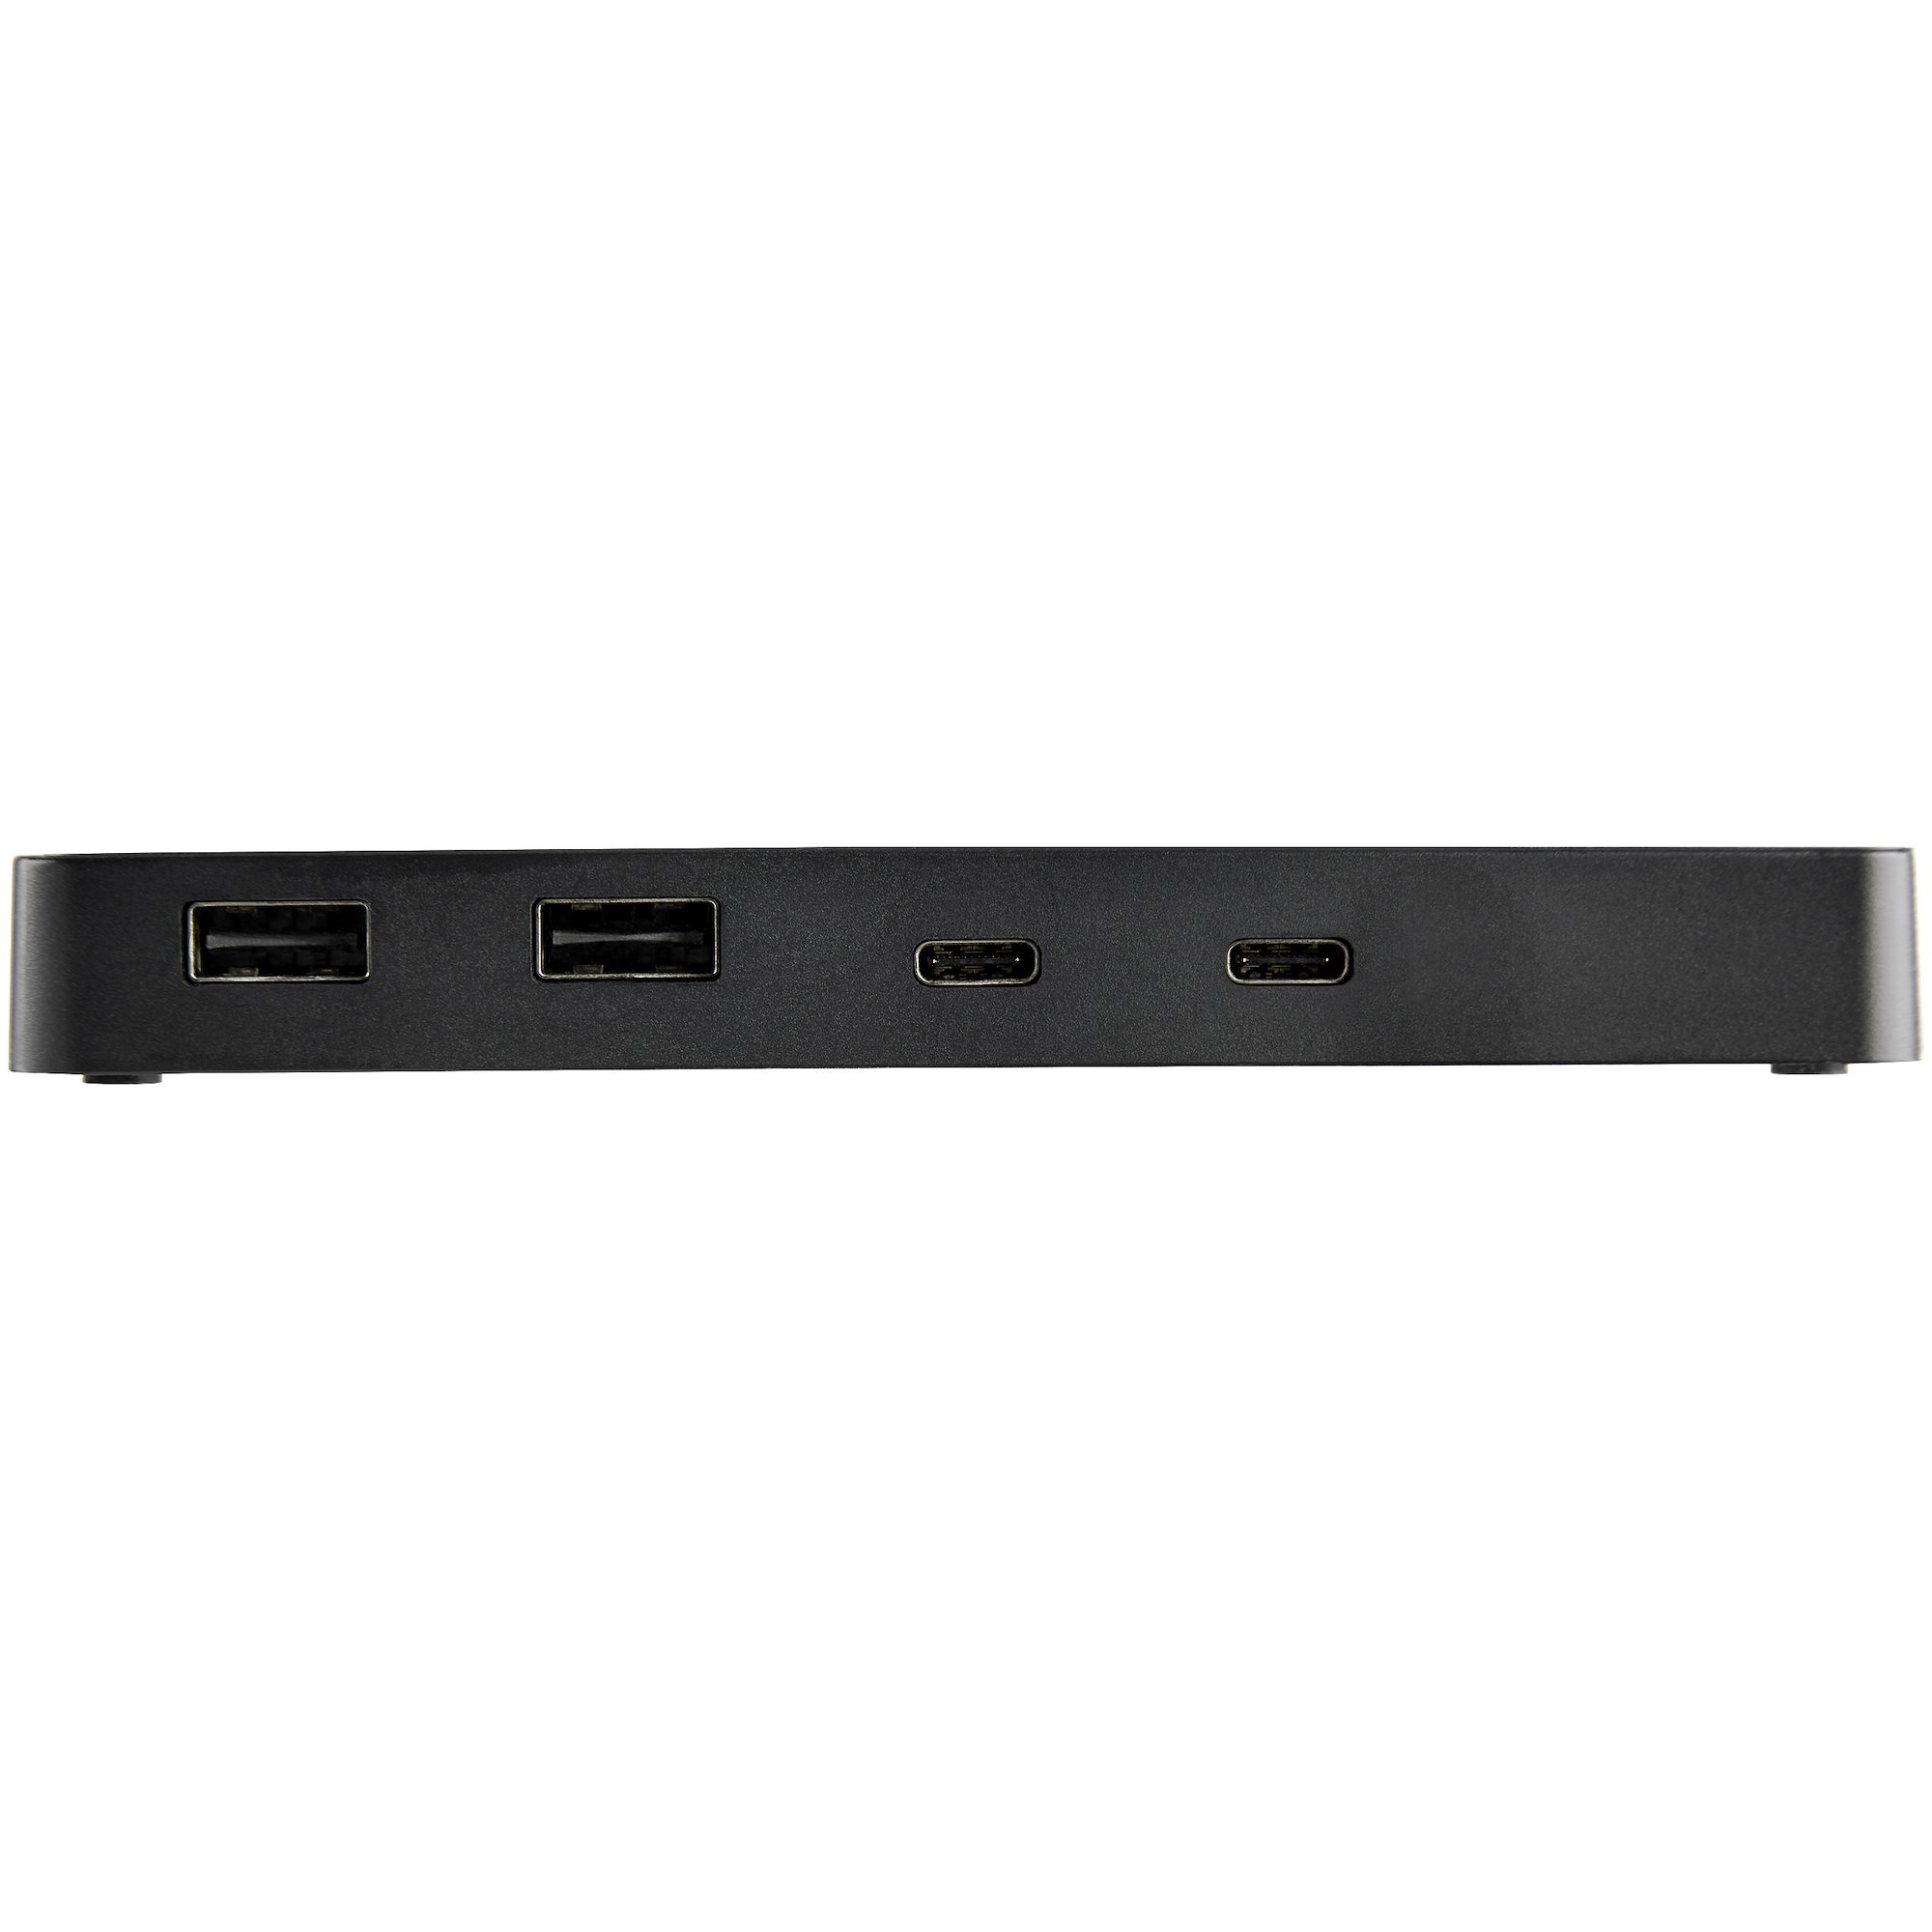 2 Port USB C KVM Switch - 4K 60Hz HDMI - Compact Dual Port UHD USB Type C  Desktop Mini KVM Switch with USB C Cables - Bus Powered - MacBook iPad Pro